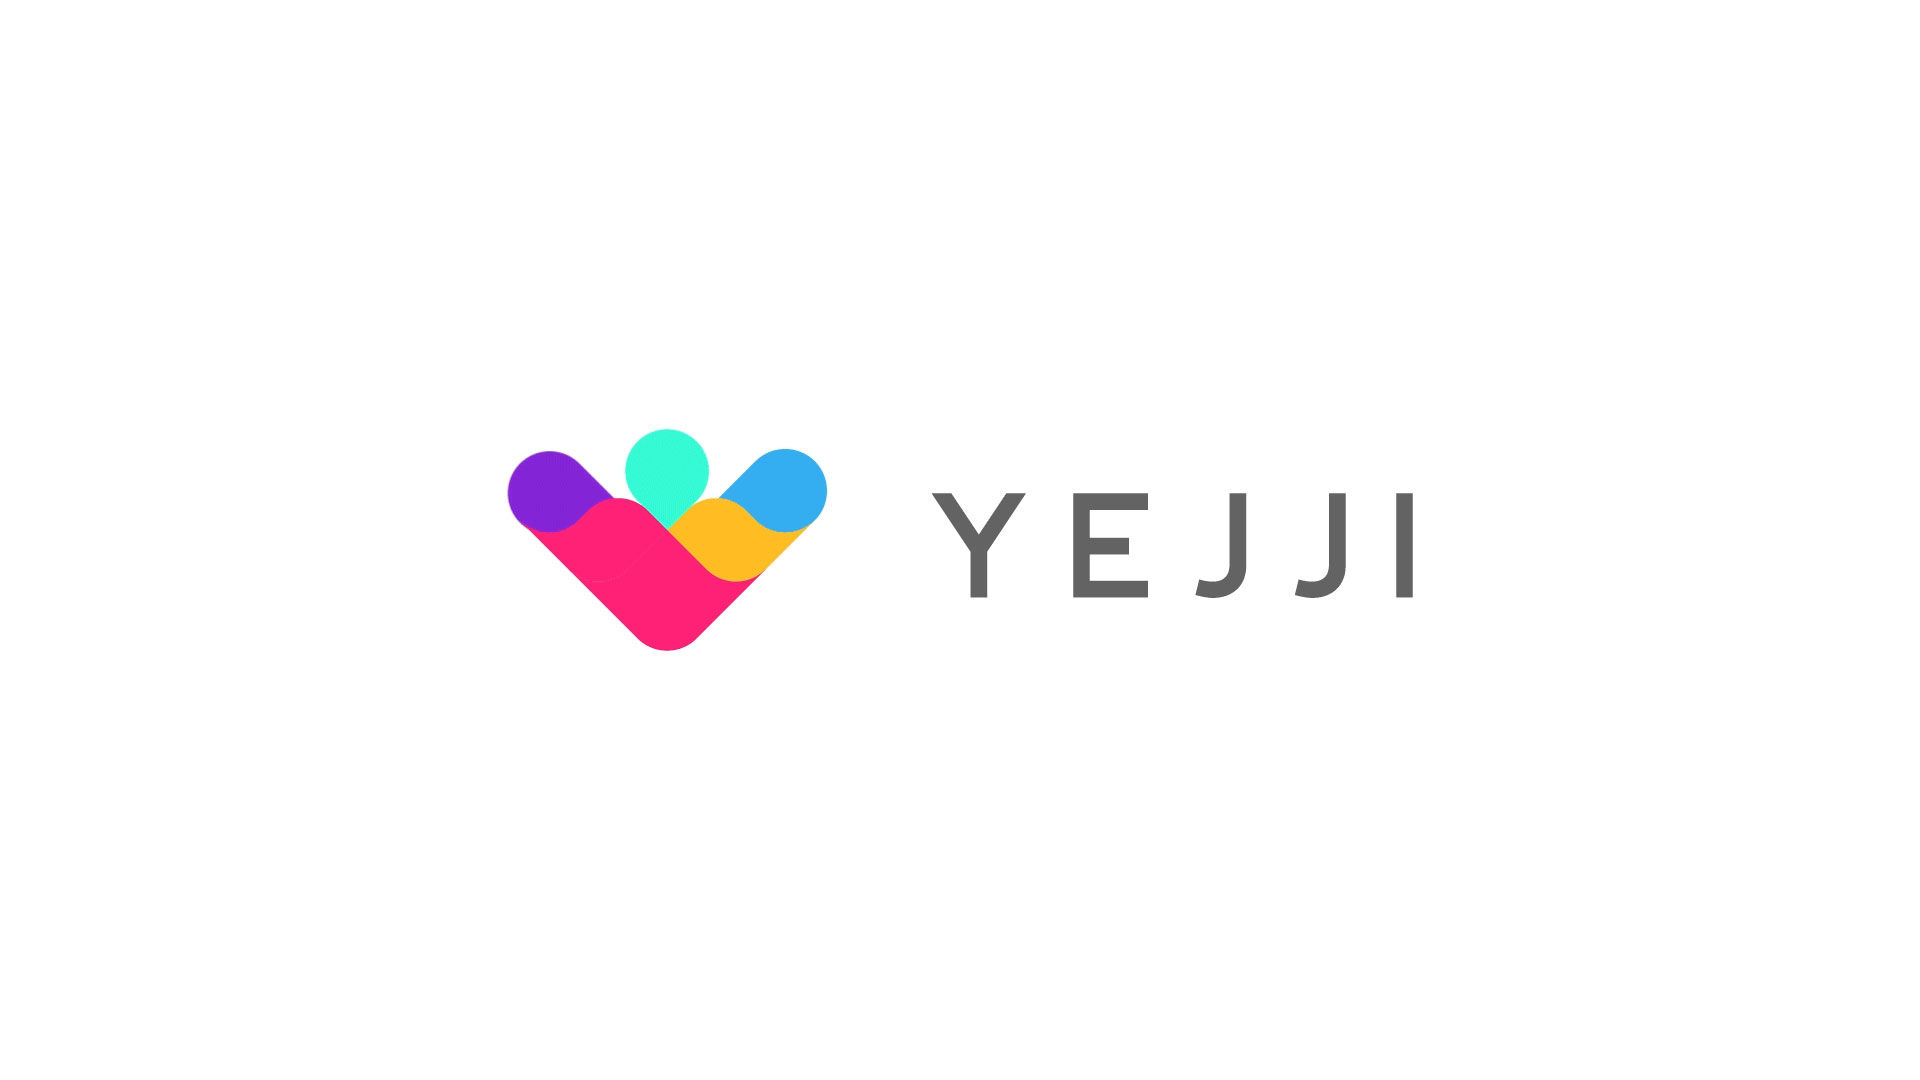 Yejji Brand Identity Design by Muhammad Faraj